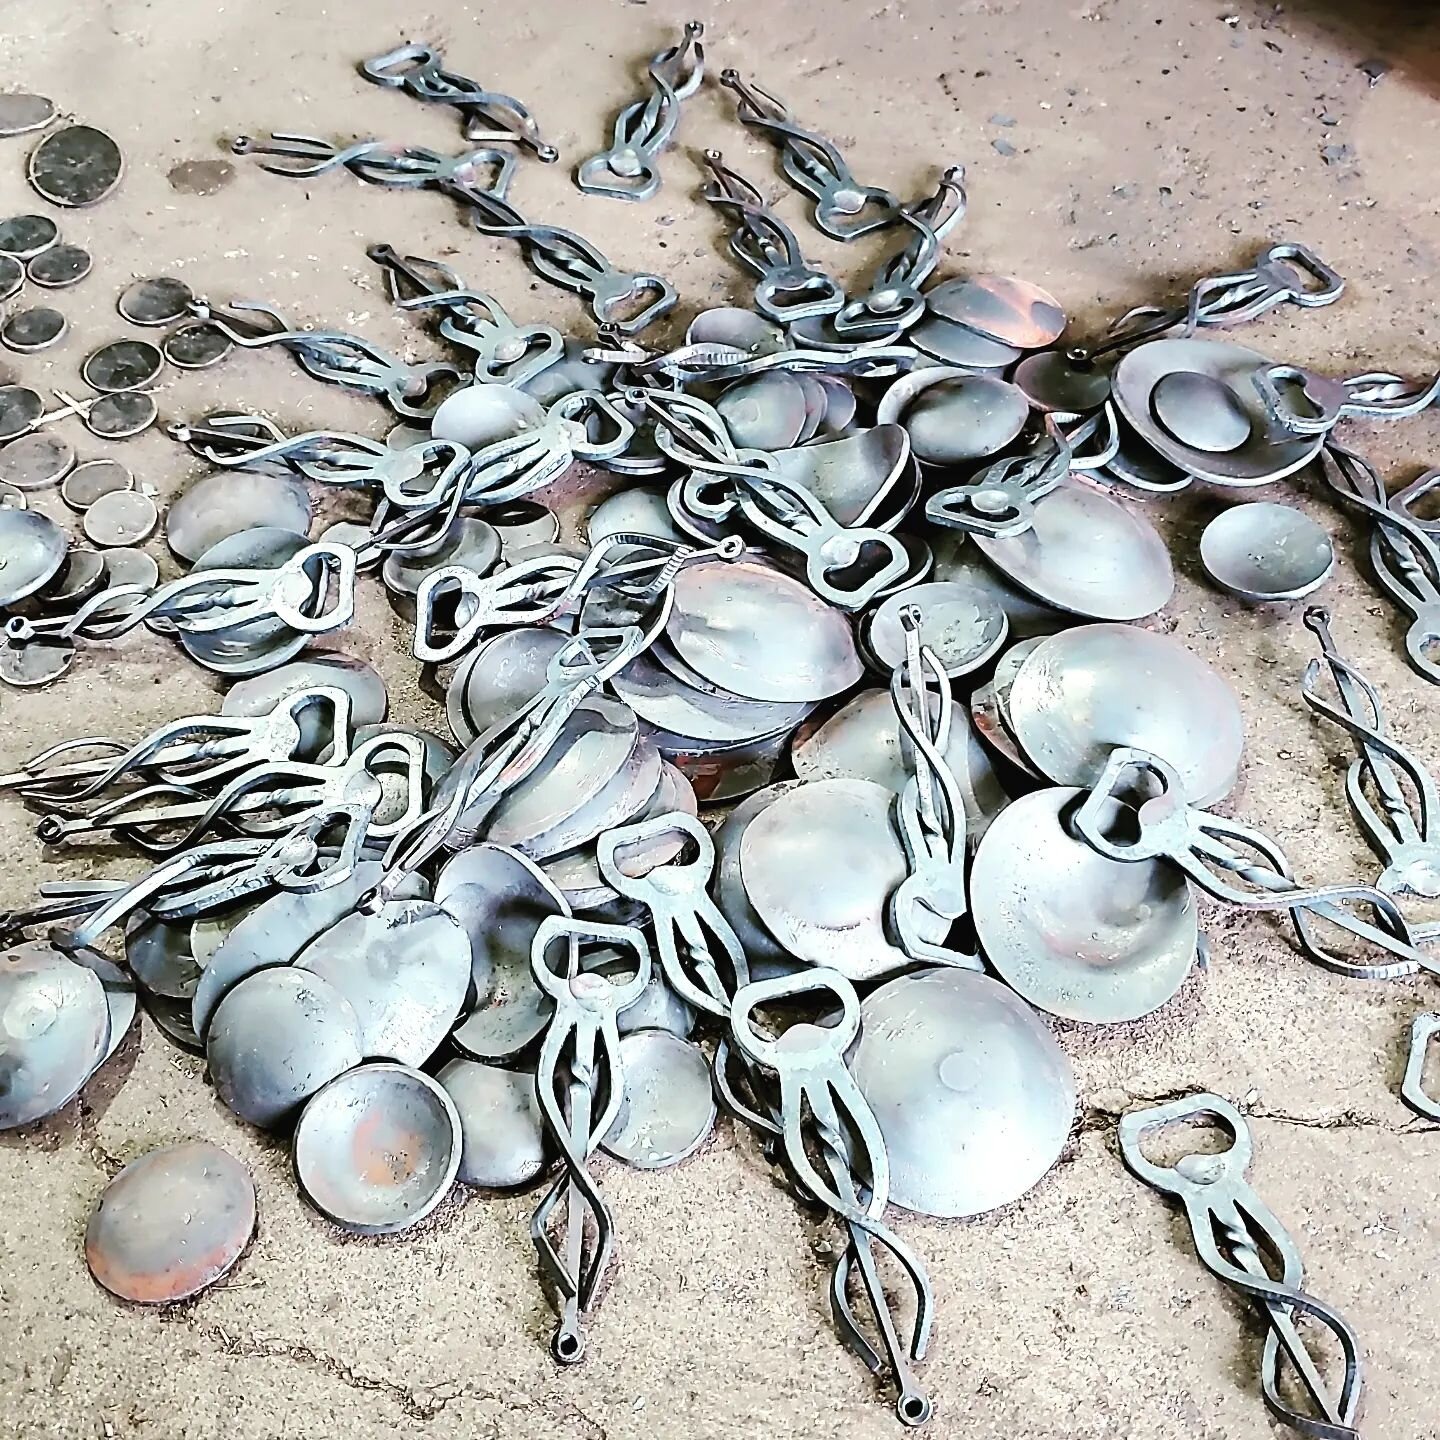 Finishing up some bottlecap openers
#metalwork #forge #blacksmith #bottleopener